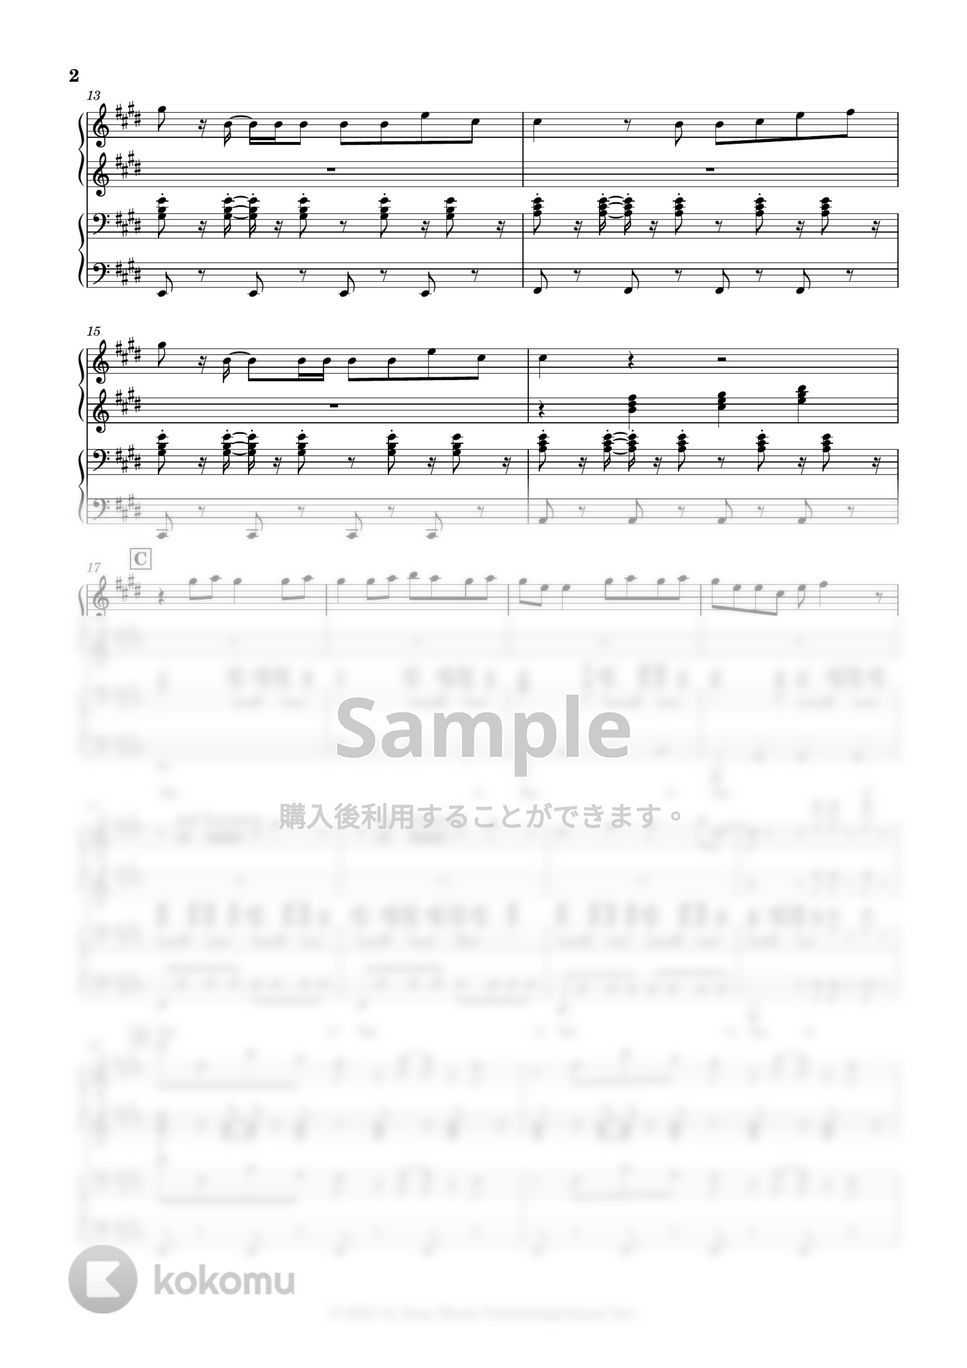 NiziU - Poppin' Shakin' (連弾 / ソフトバンク「NiziU LAB」CMソング) by Trohishima